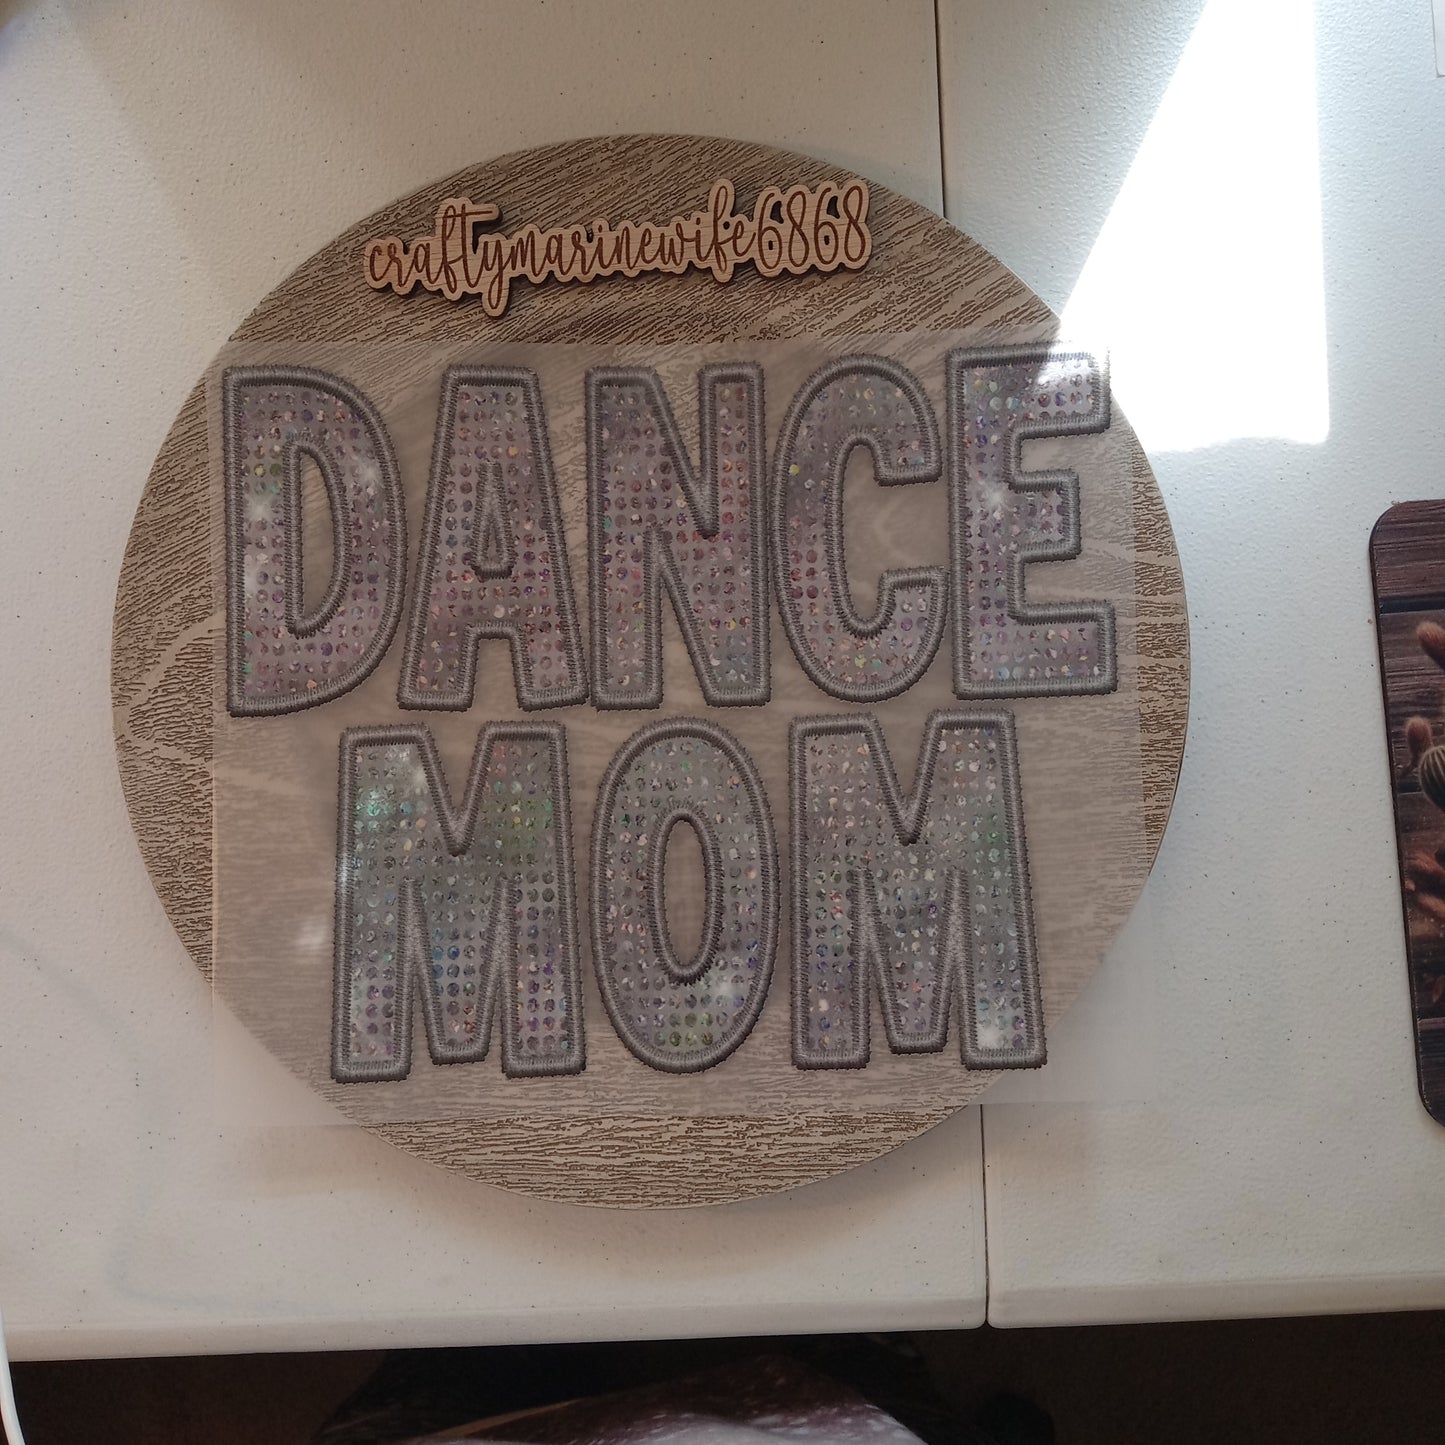 Dance mom dtf